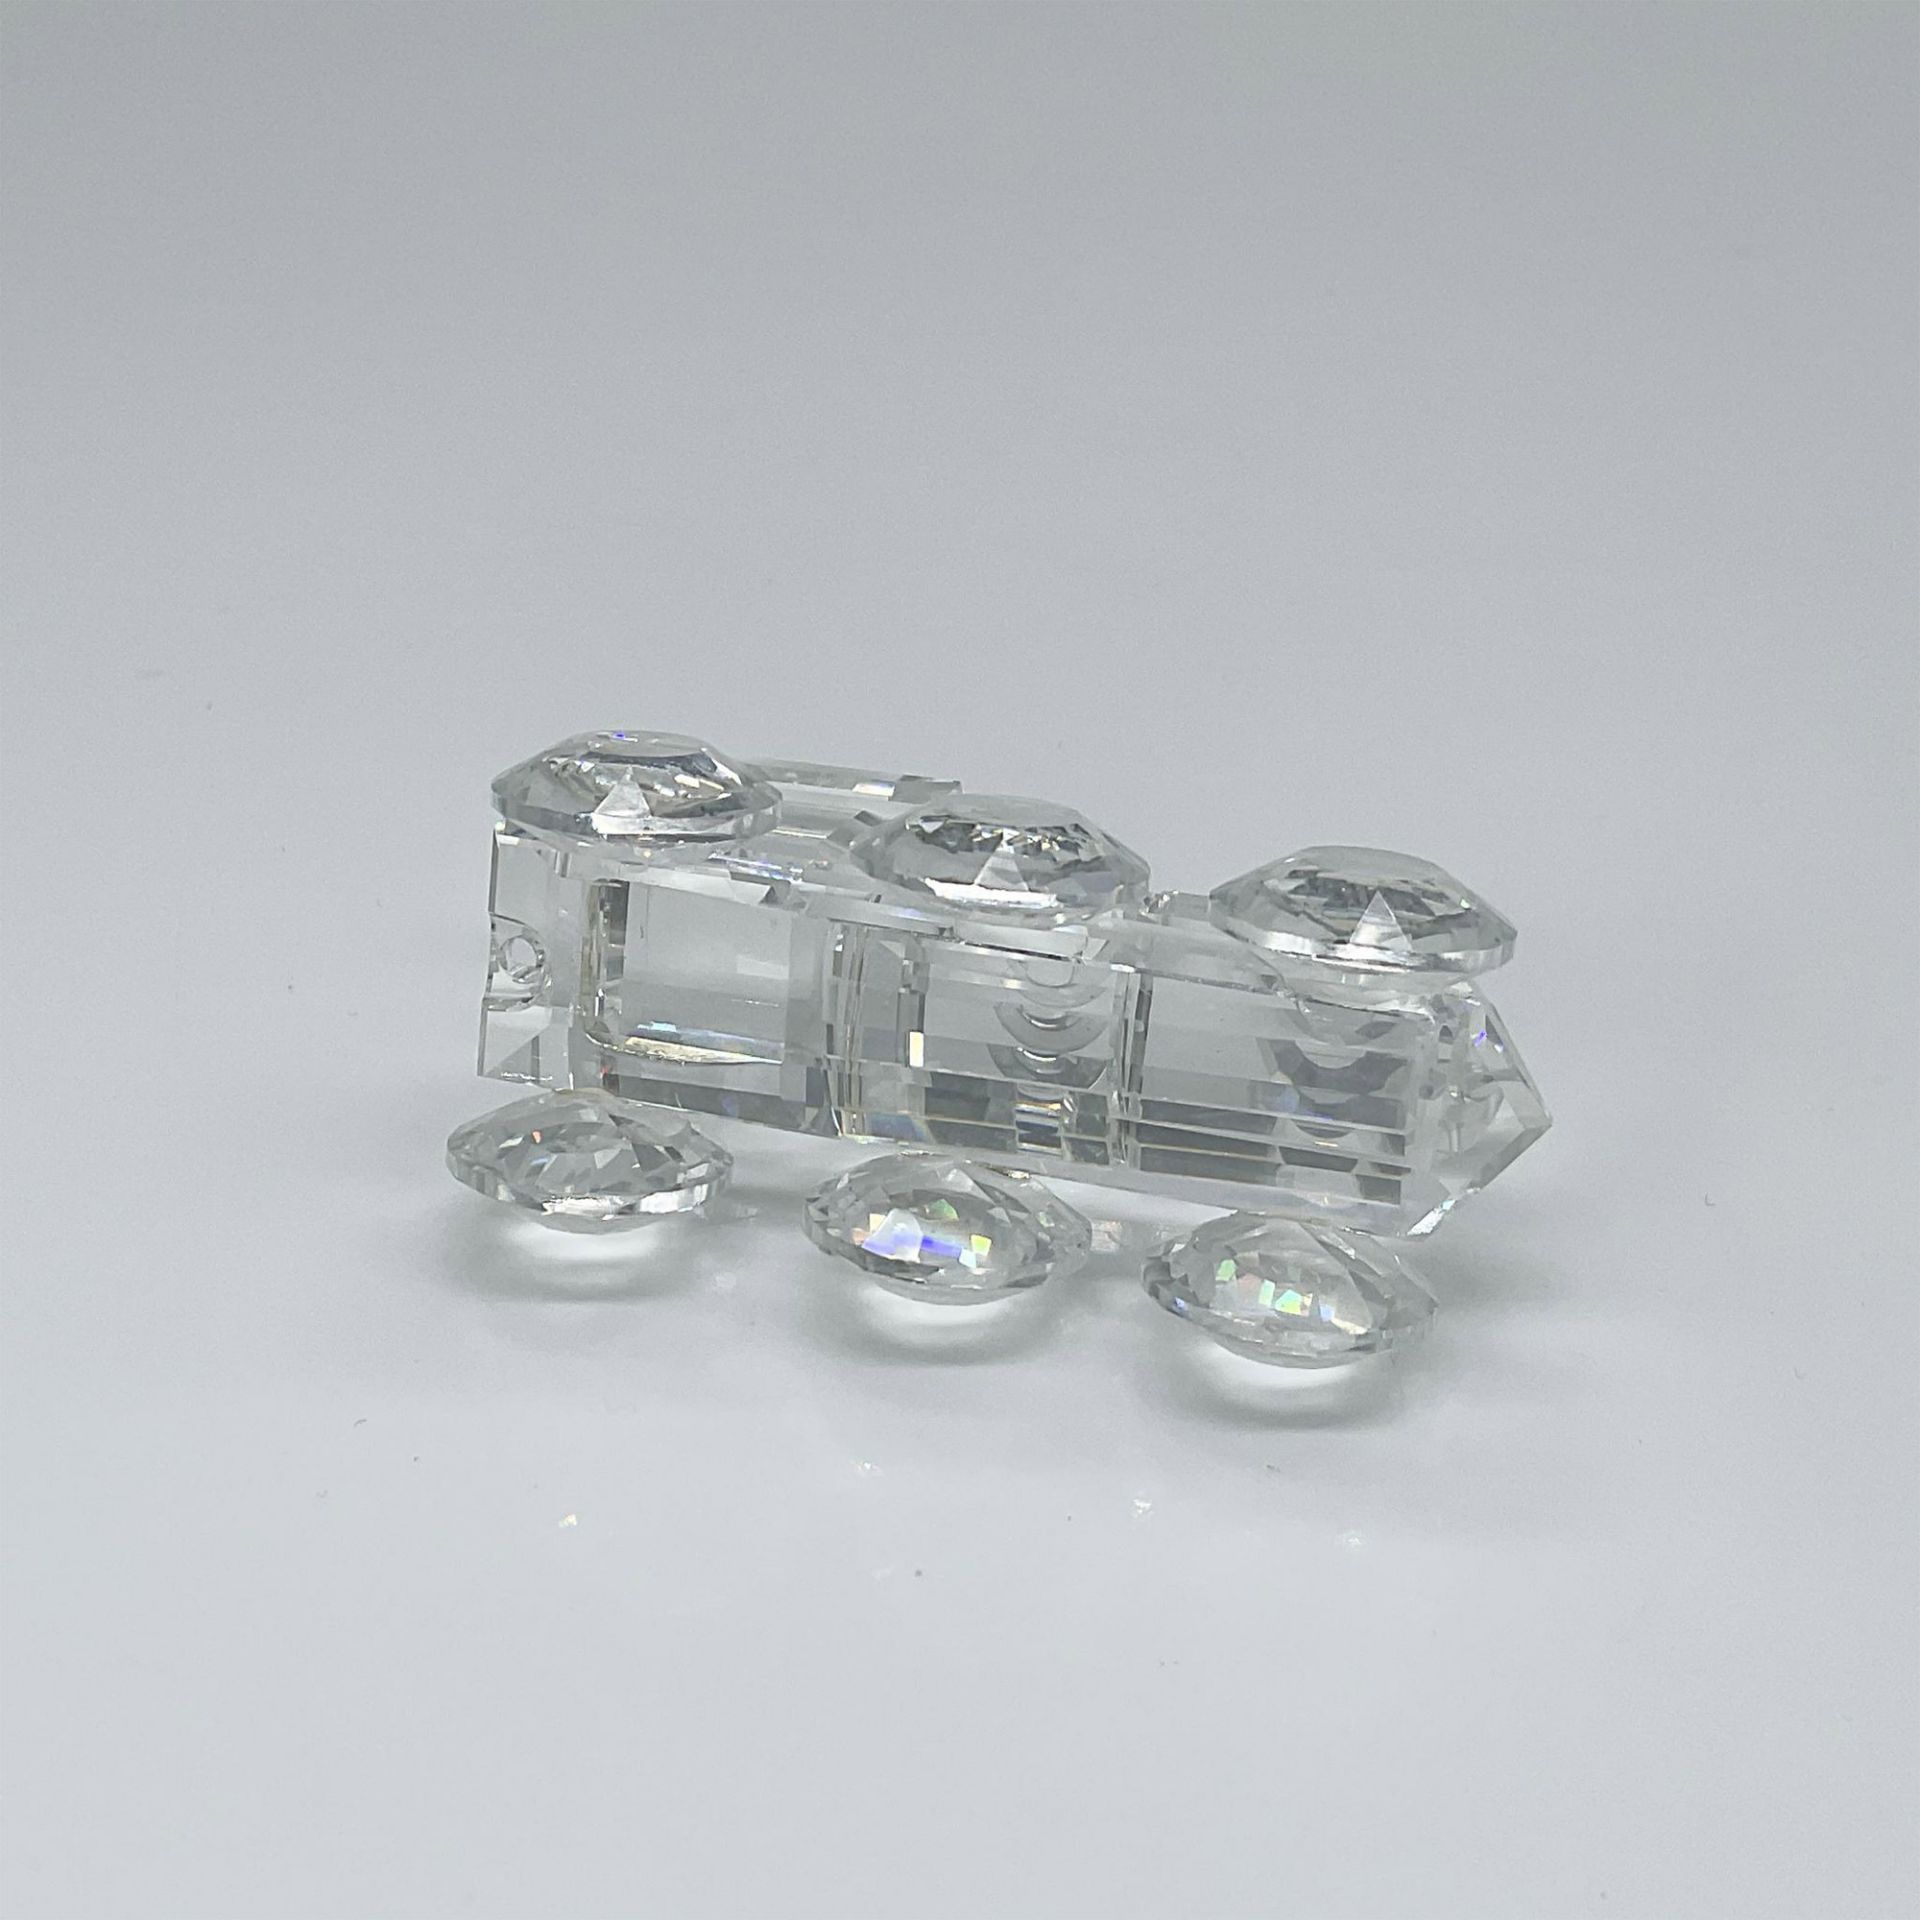 Swarovski Silver Crystal Figurine, Train Locomotive - Image 3 of 4